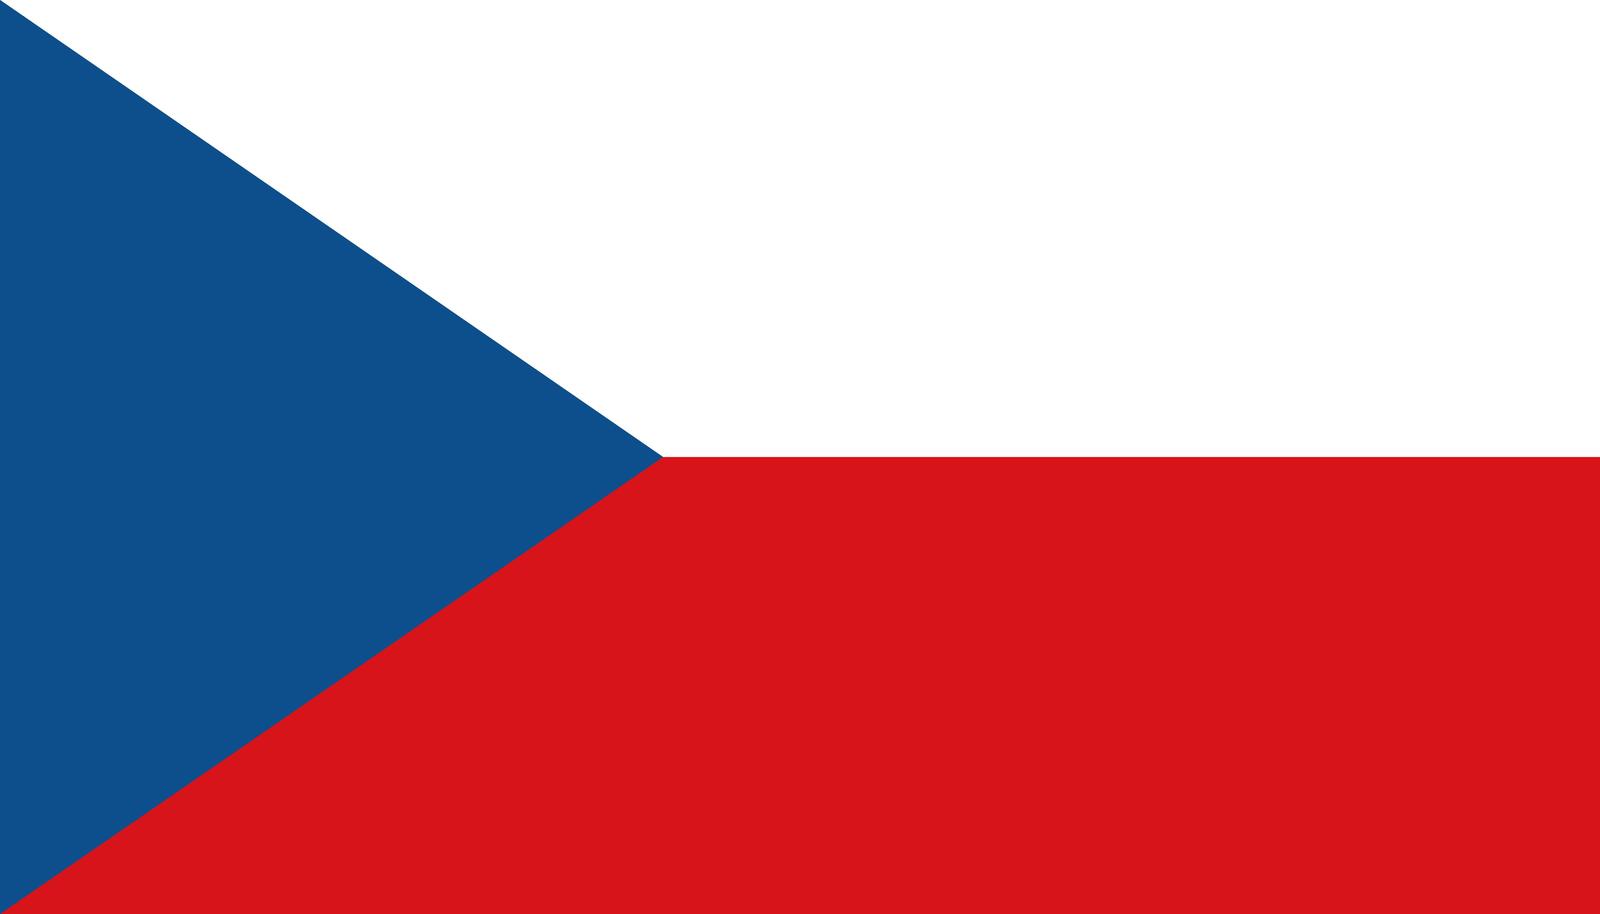 Czech Republic crypto